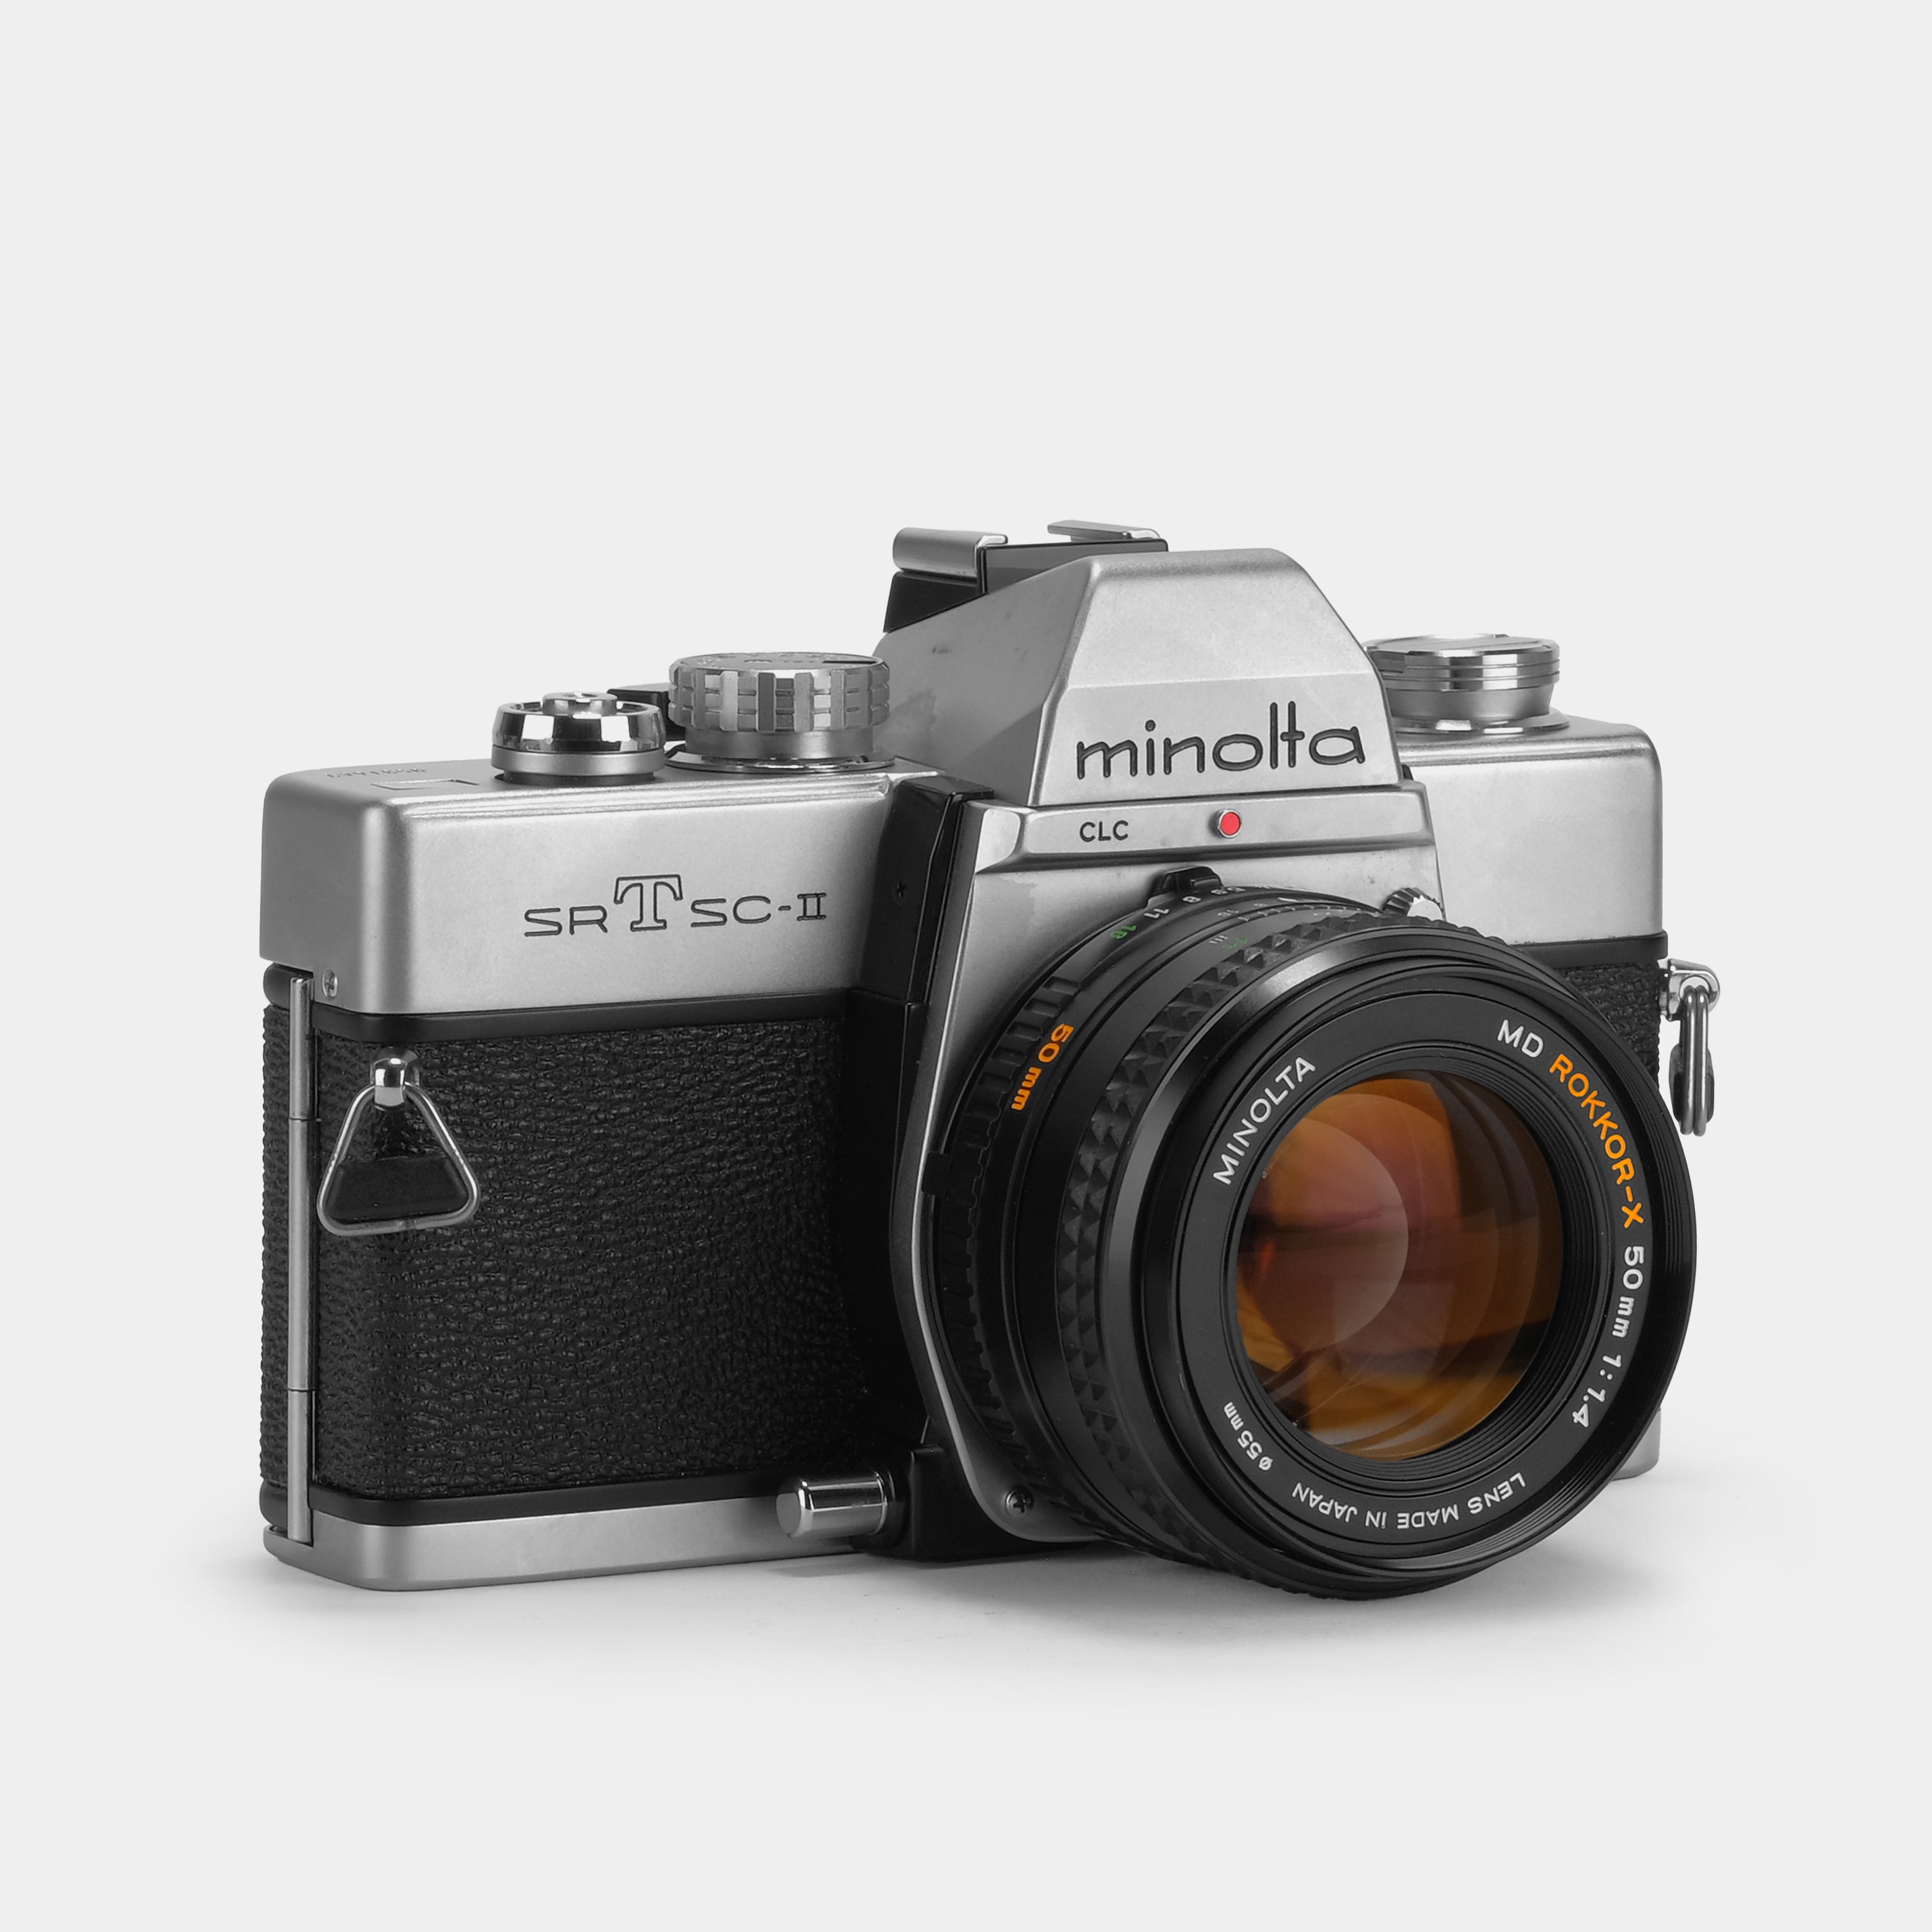 Minolta SRT SC-II 35mm SLR Film Camera